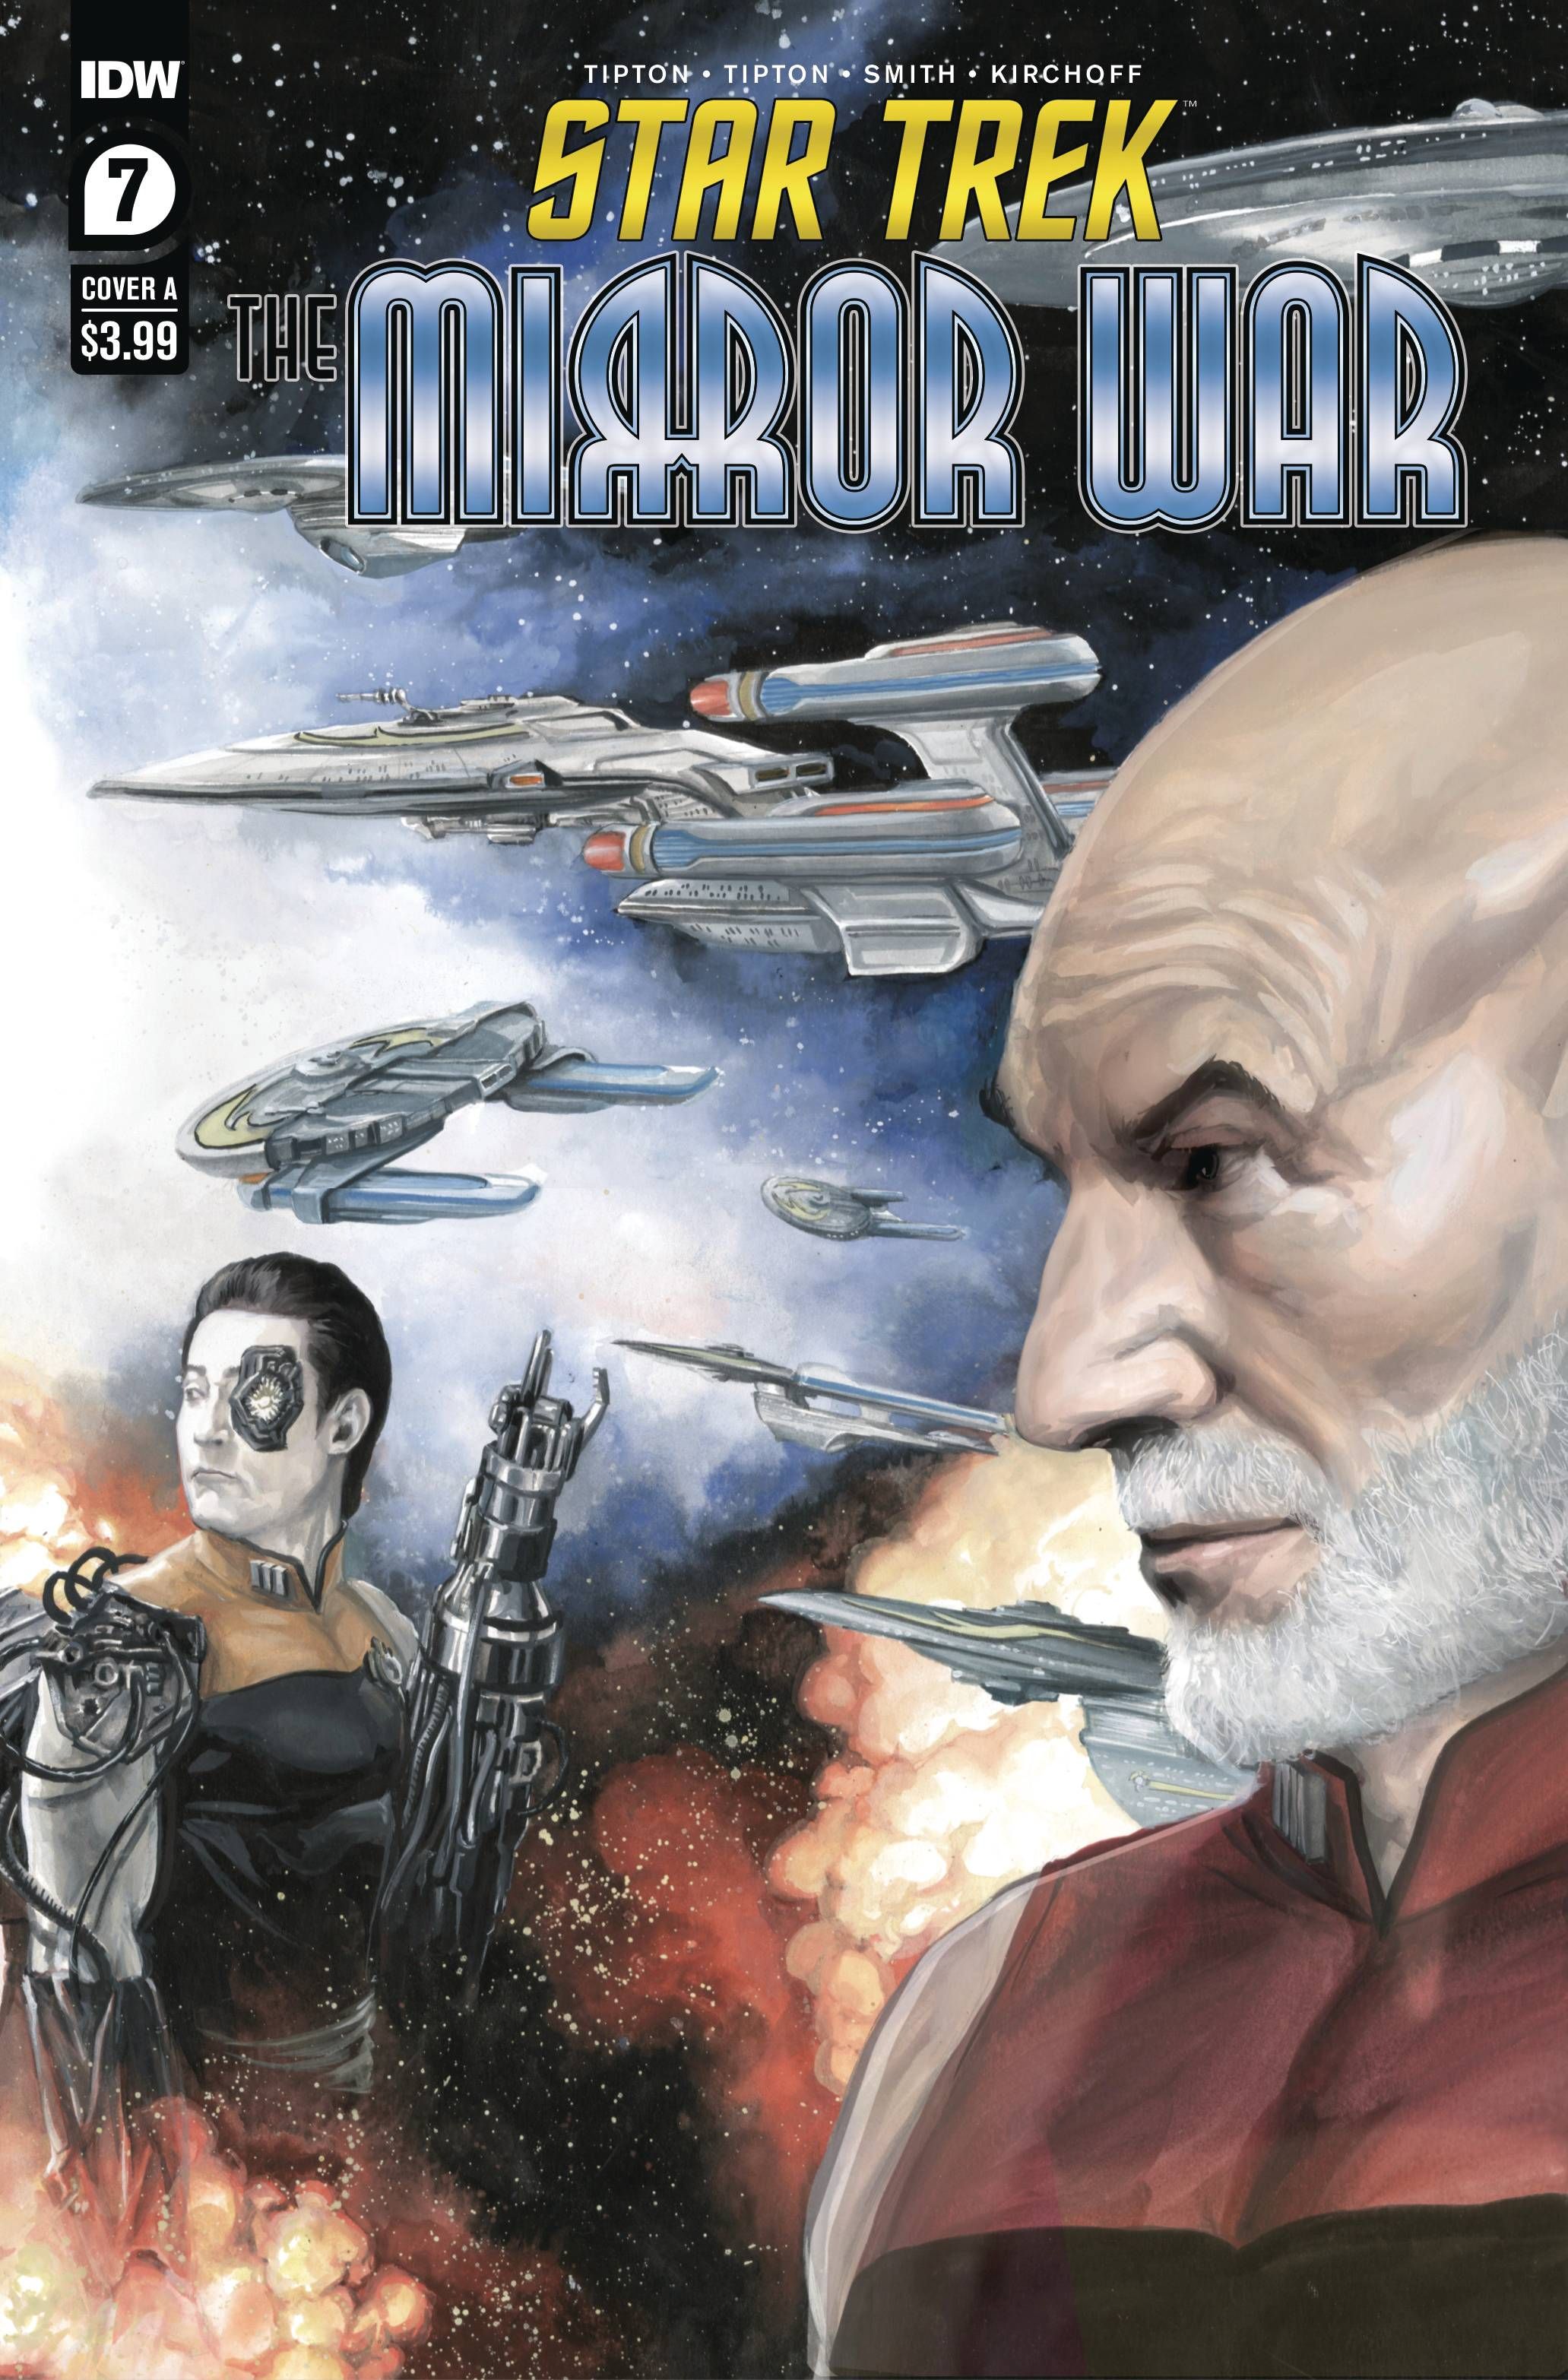 Star Trek: The Next Generation - Mirror War #7 Comic